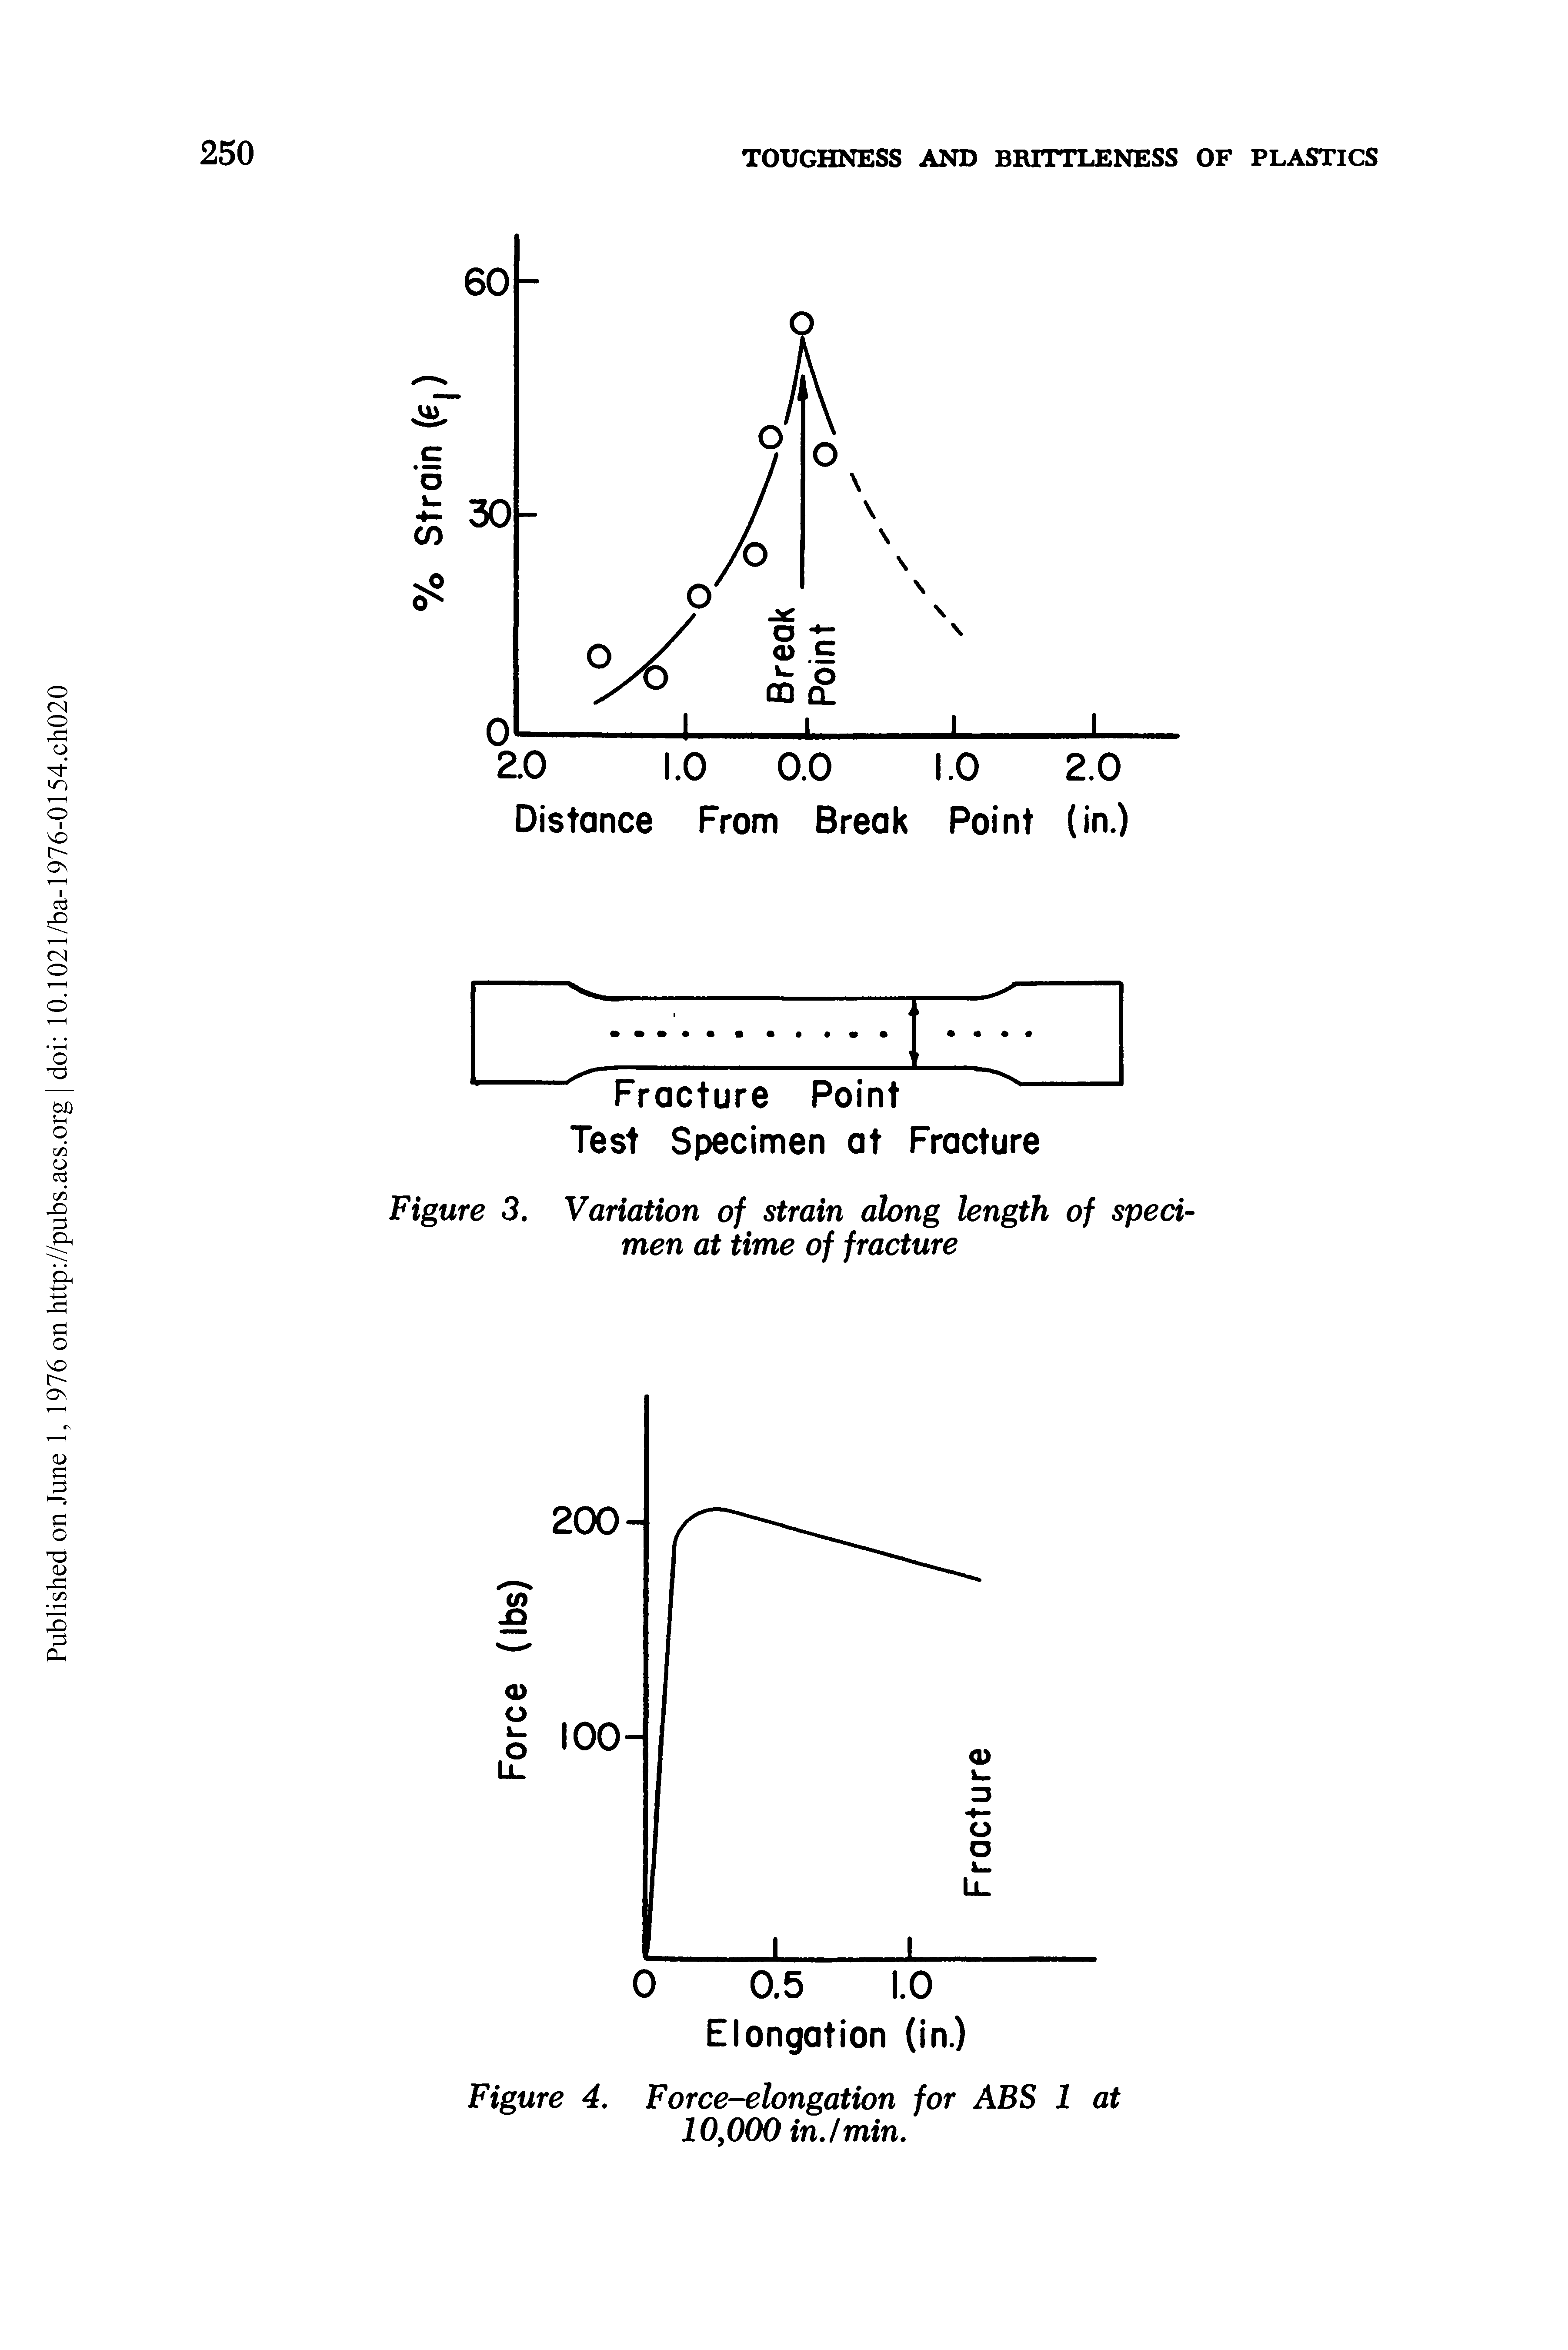 Figure 3. Variation of strain along length of specimen at time of fracture...